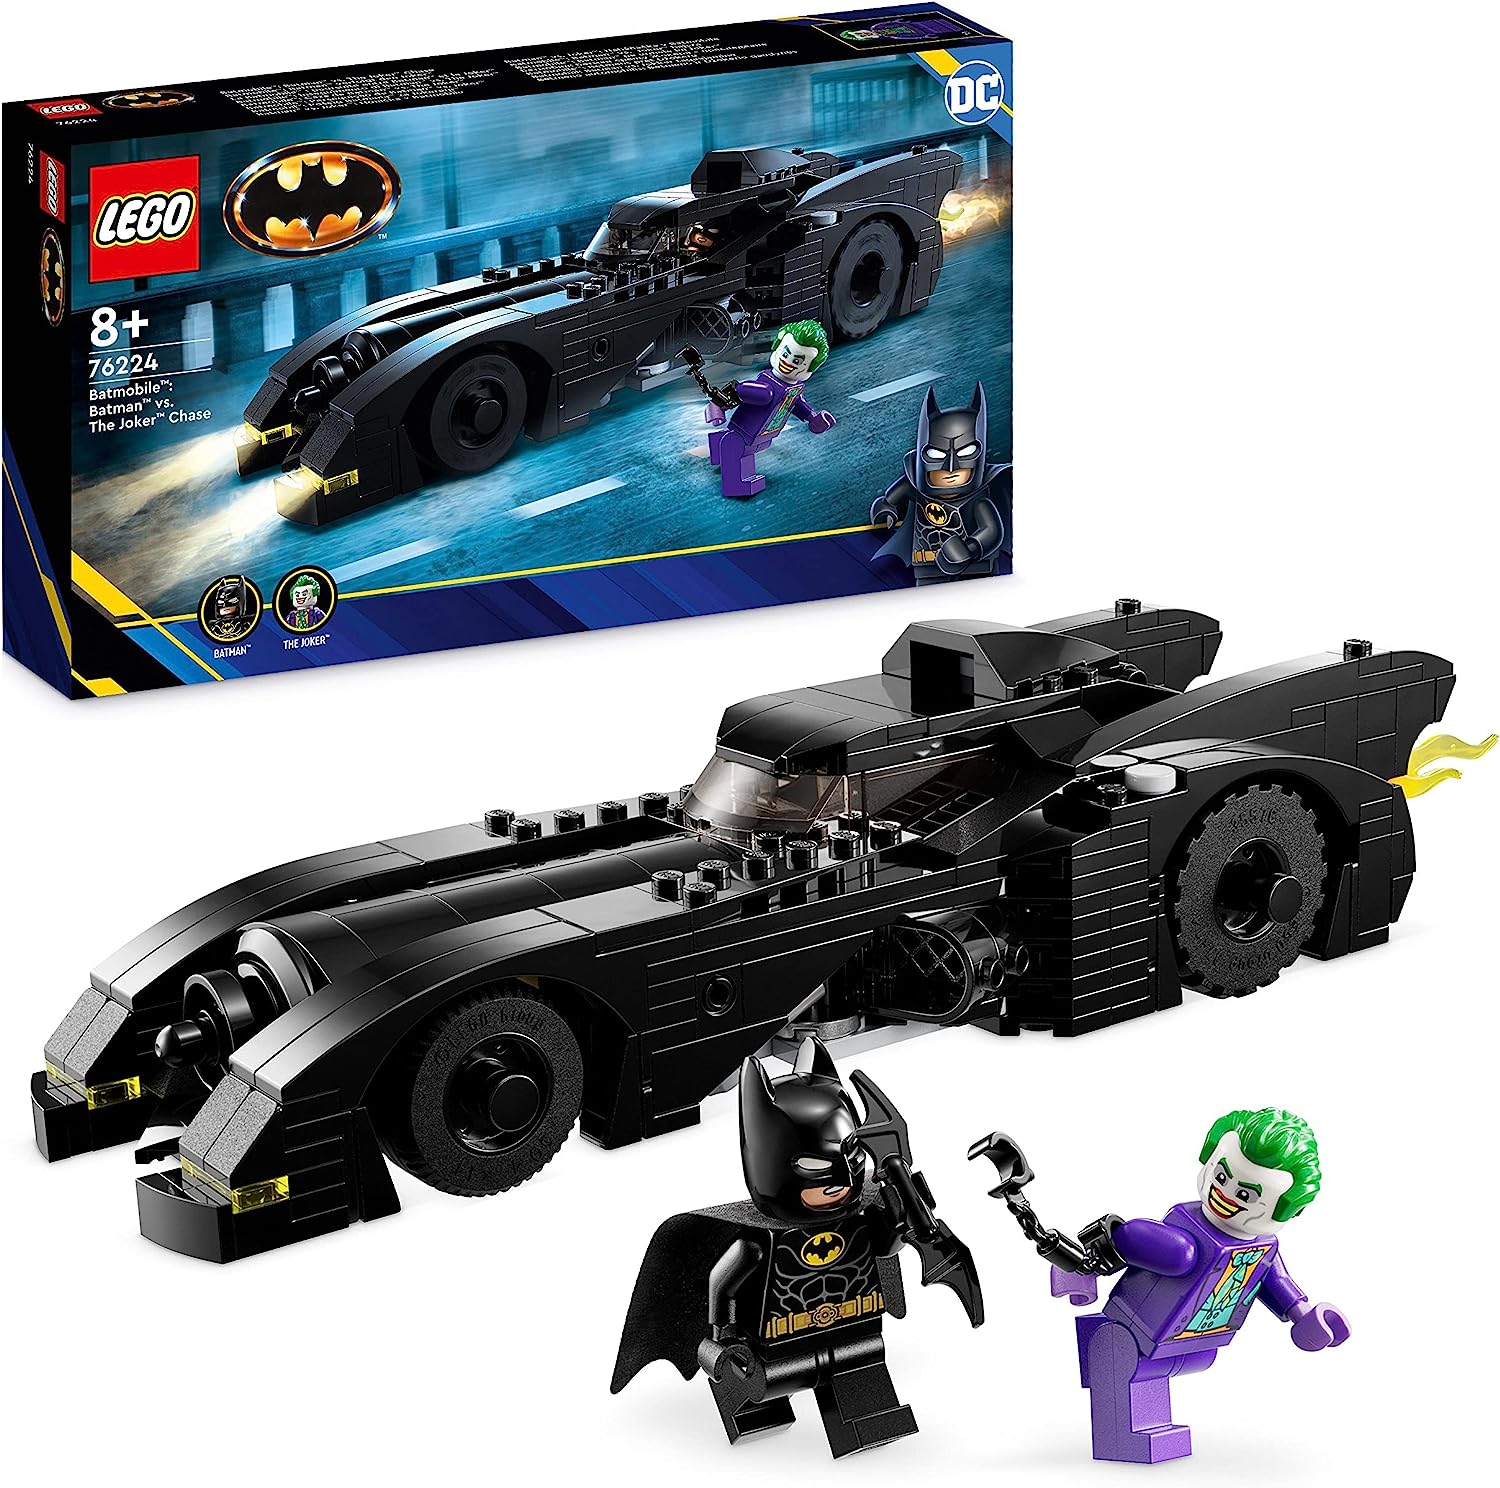 LEGO 76224 DC Batmobile: Batman Tracks the Joker Set, 1989 Batmobile Toy Car with 2 Mini Figures, Car Model of the Dark Knight with Batarang, Superhero Gift for Kids (Pre-Order Now)